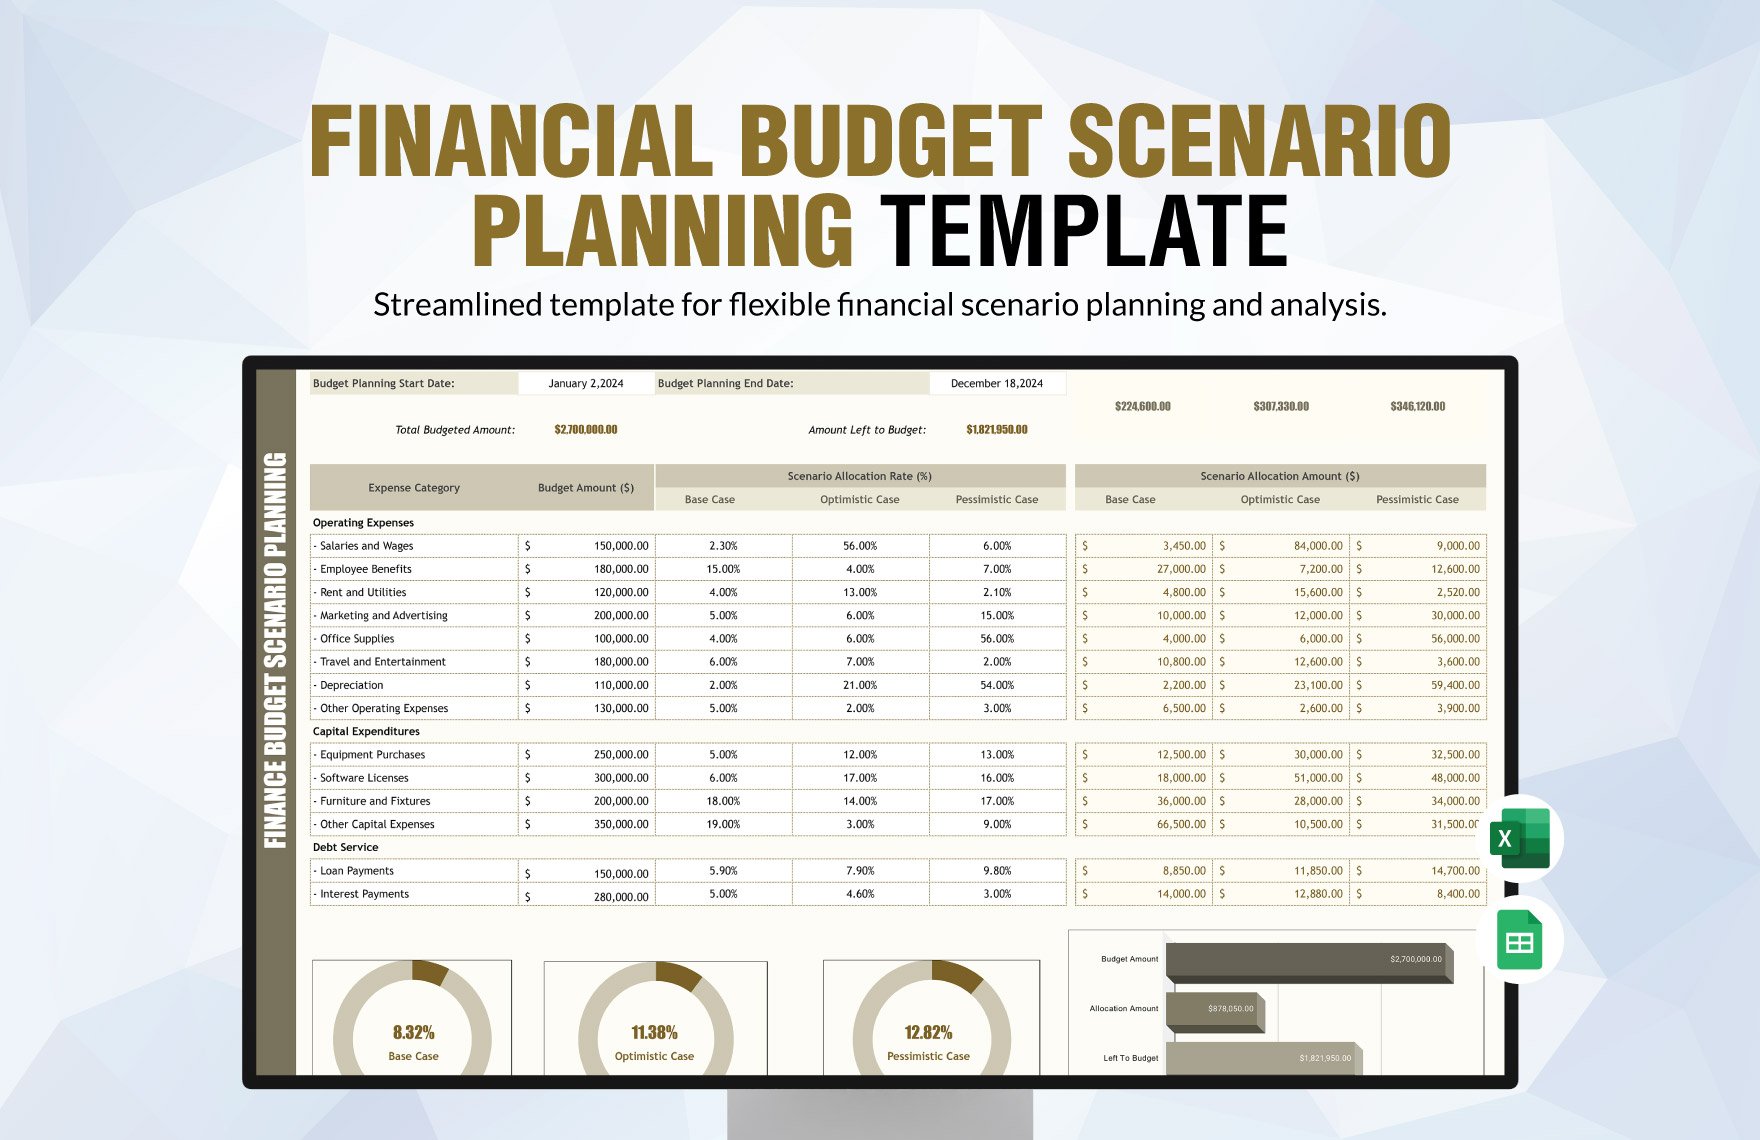 Finance Budget Scenario Planning Template